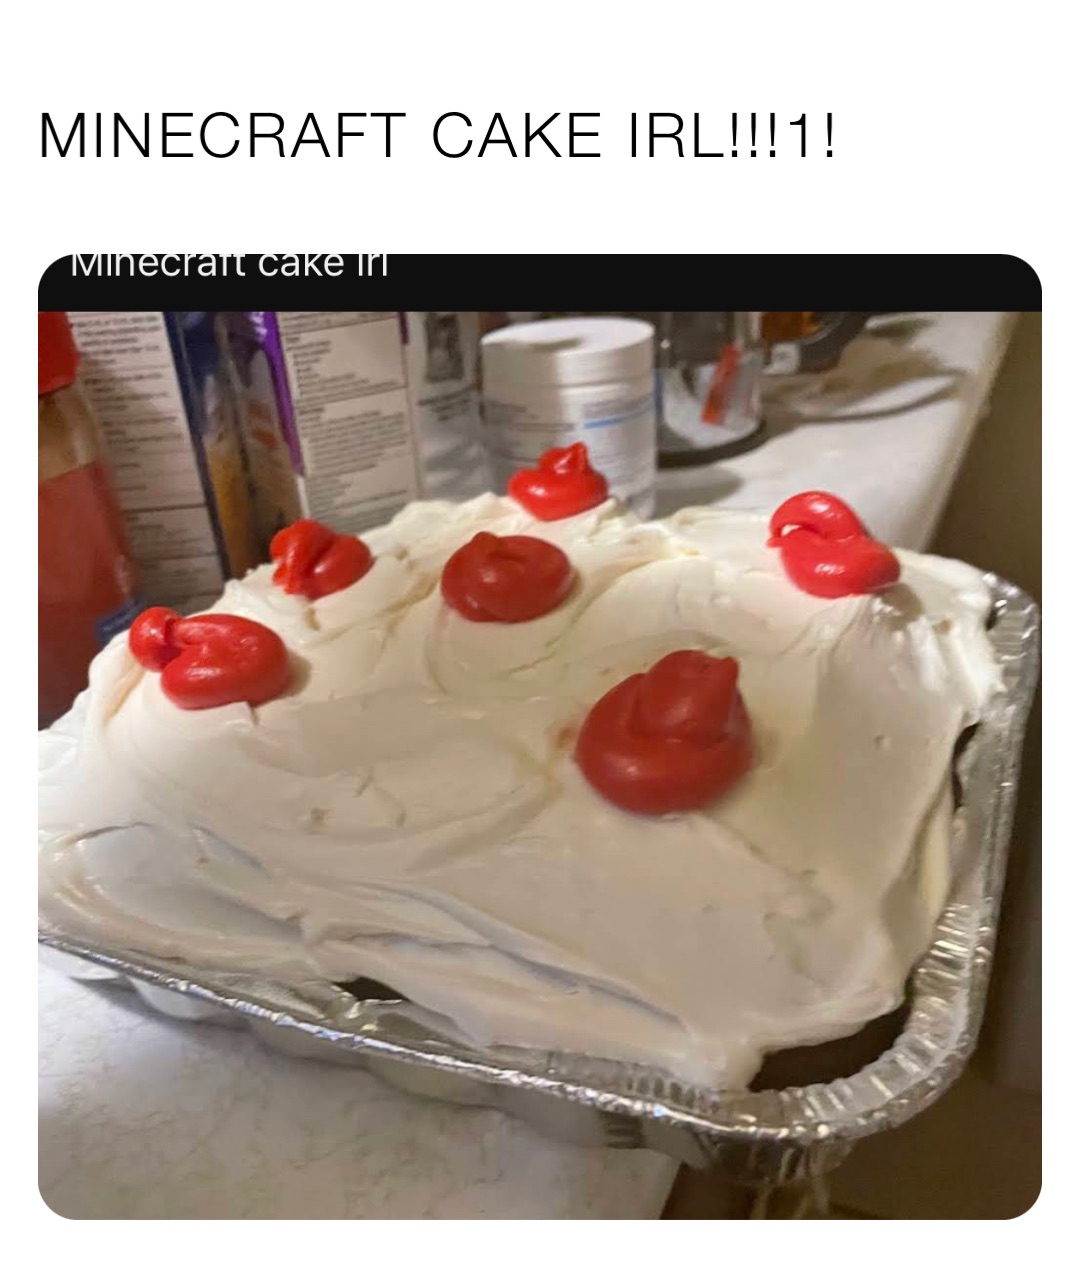 MINECRAFT CAKE IRL!!!1!